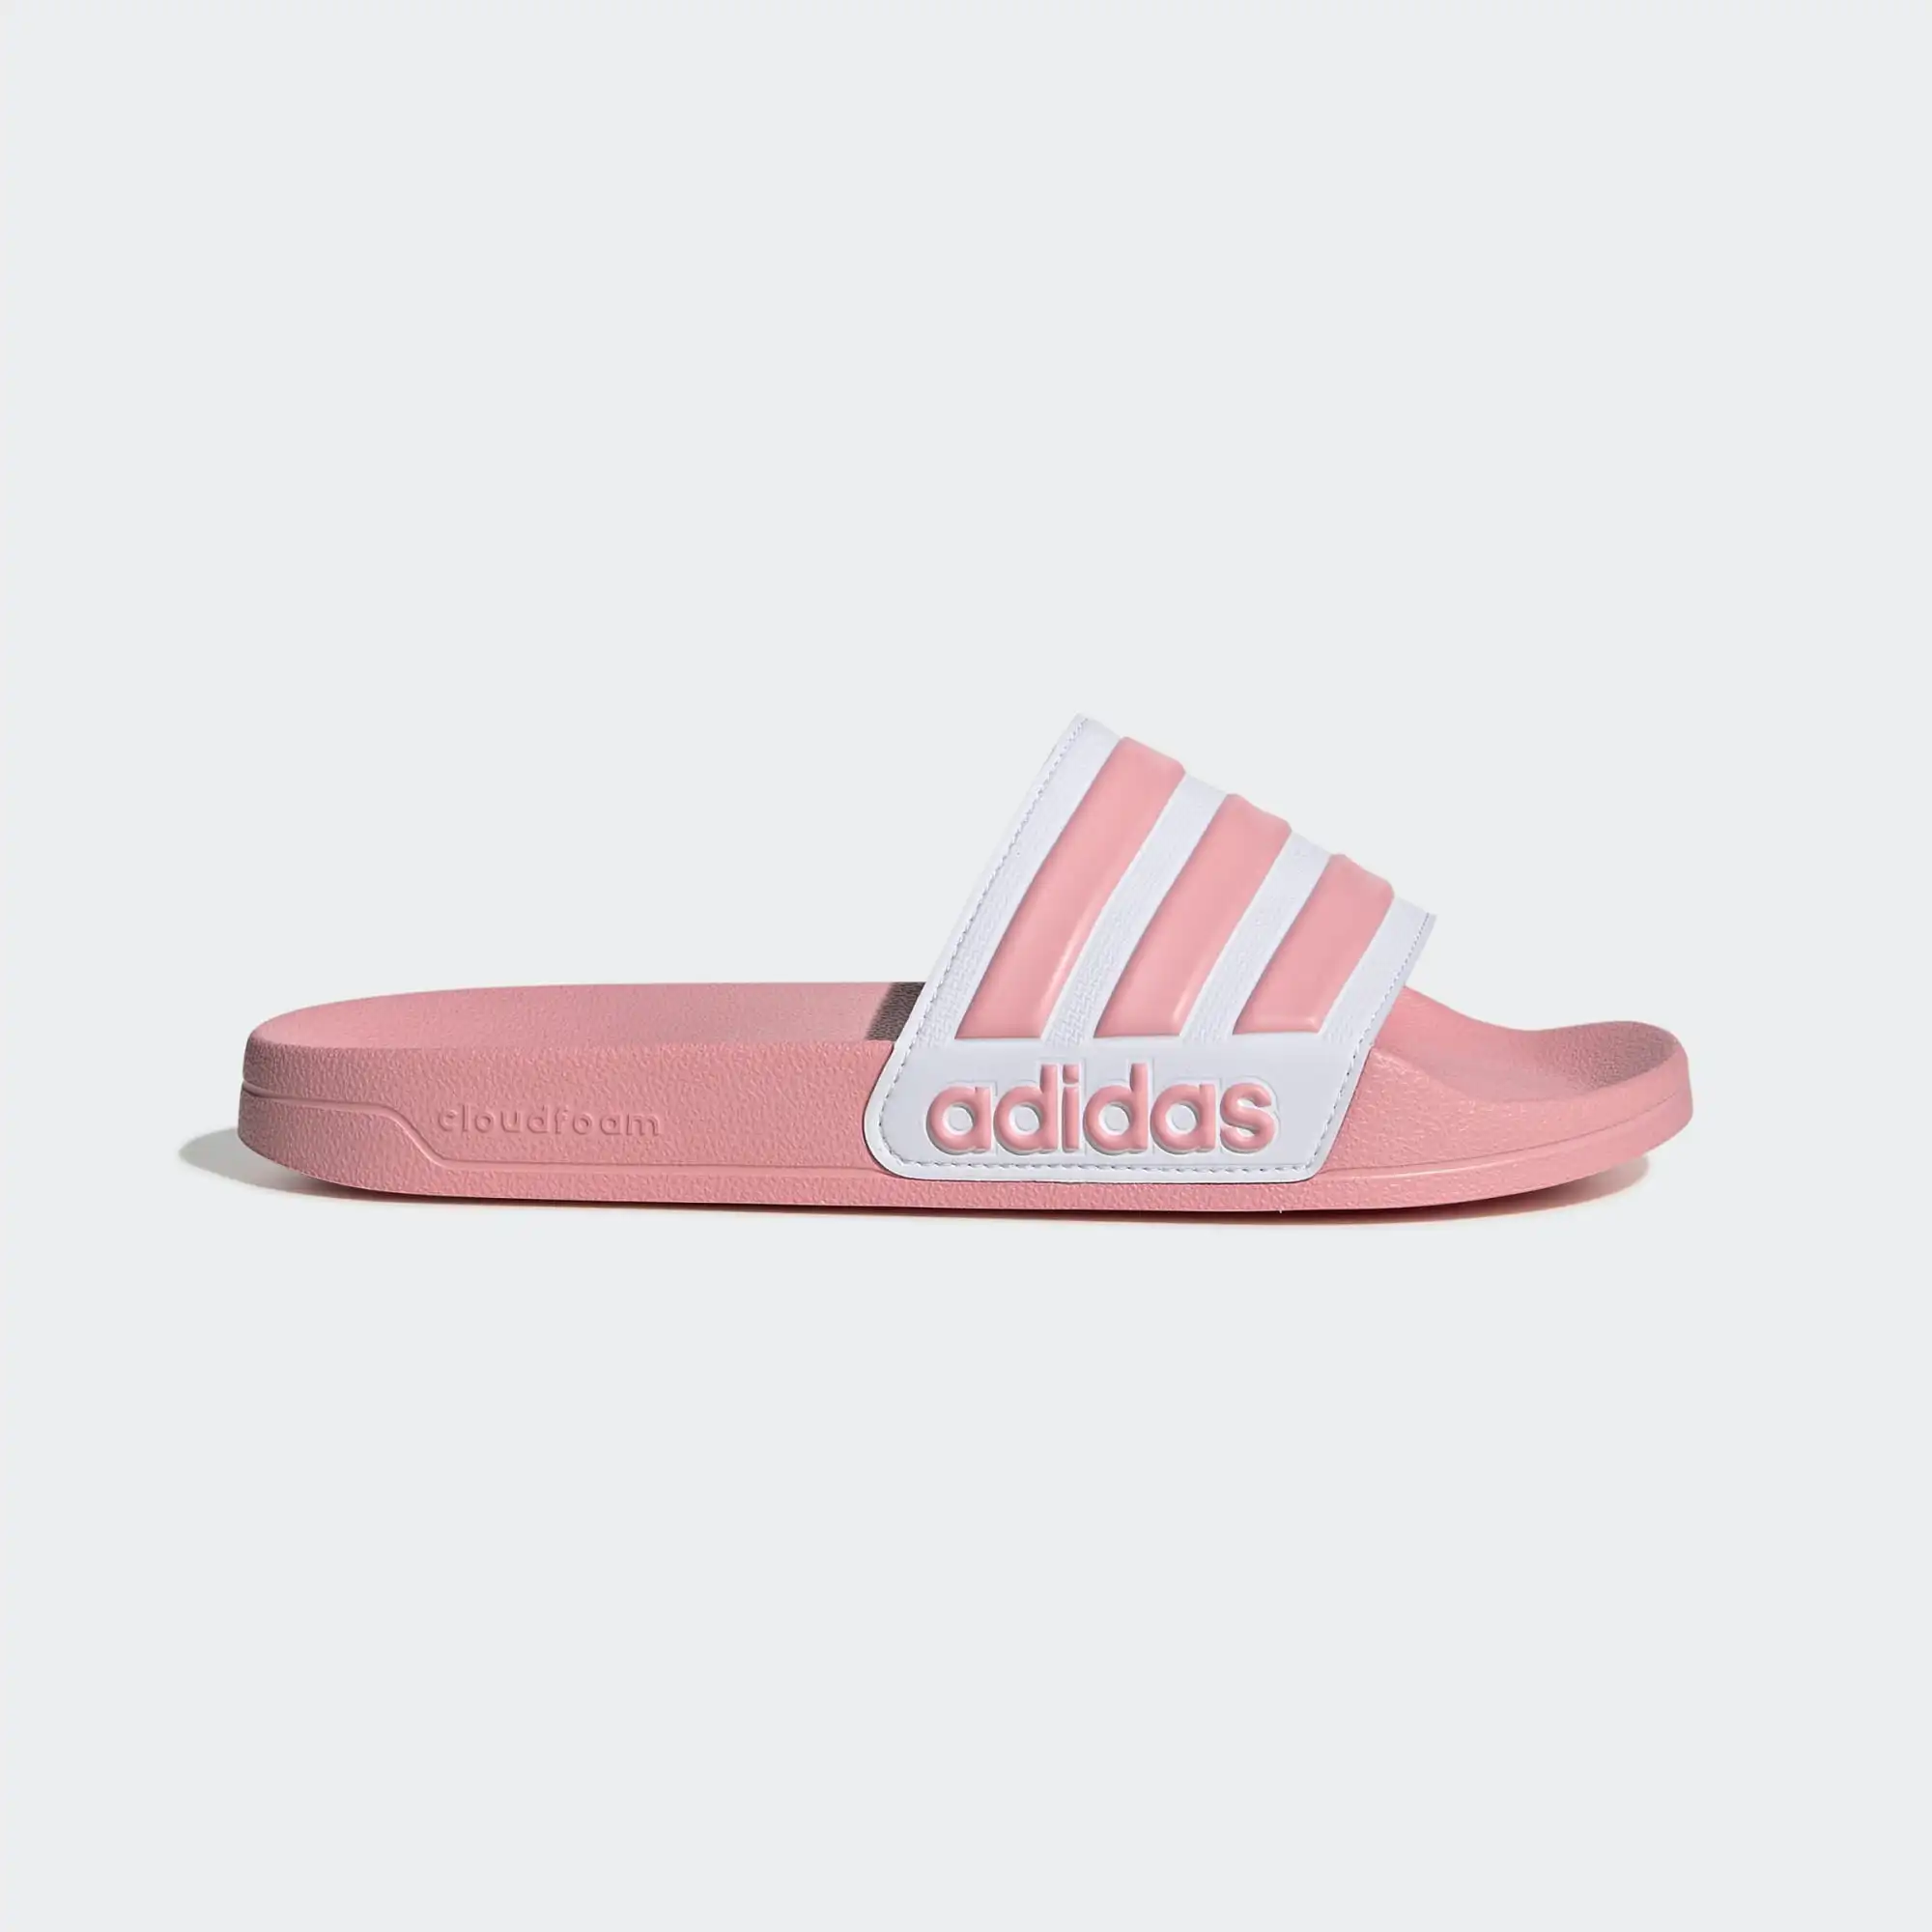 Adidas รองเท้าแตะผู้หญิง รุ่น Adilette Shower , pink , สีชมพู